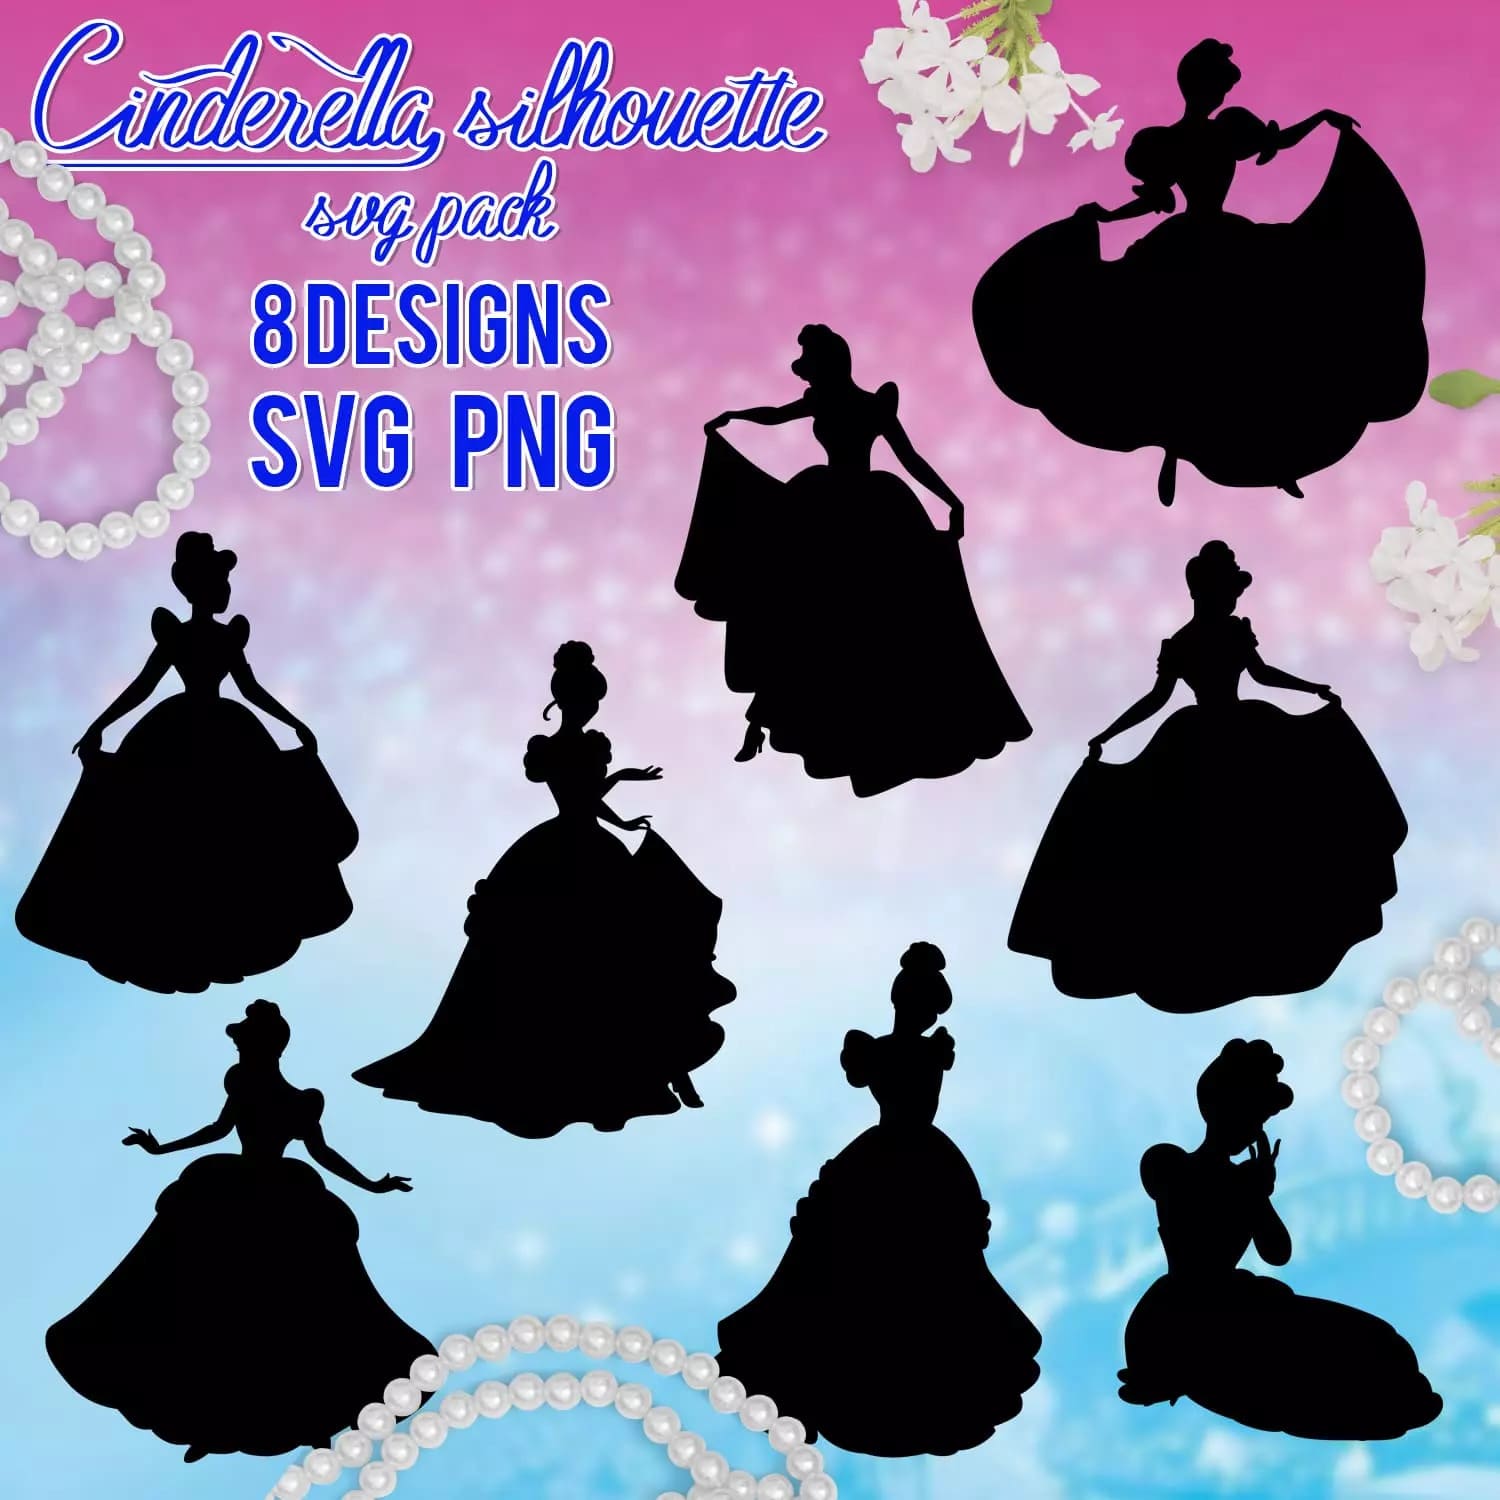 Cinderella Silhouette SVG Preview 5.